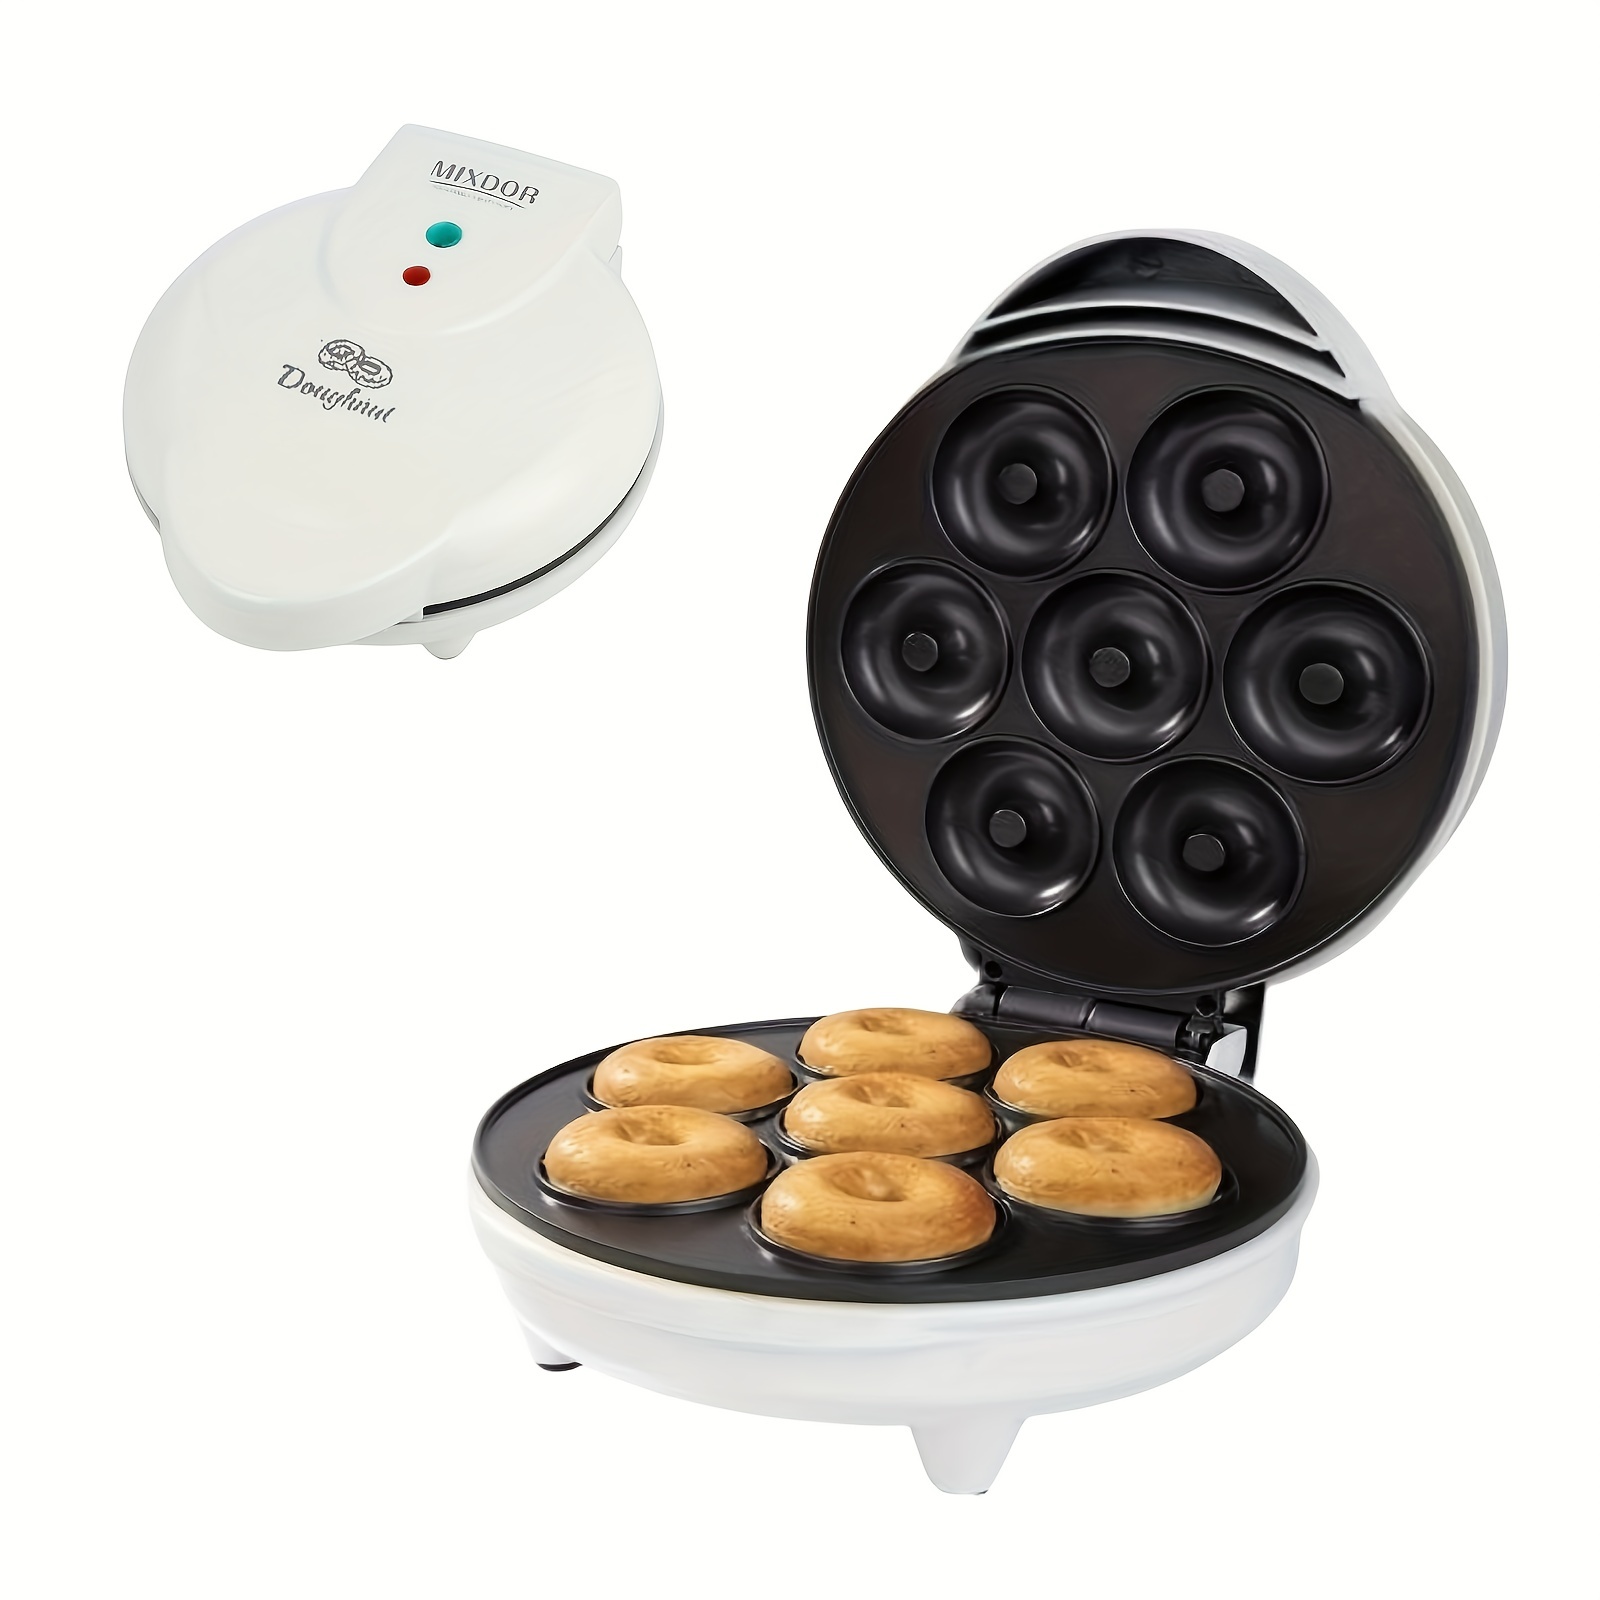 Mini Donut Maker Machine Non-stick Surface for Kids Breakfast Snack  Desserts Makes 7 Doughnuts White Color Home Appliances - AliExpress